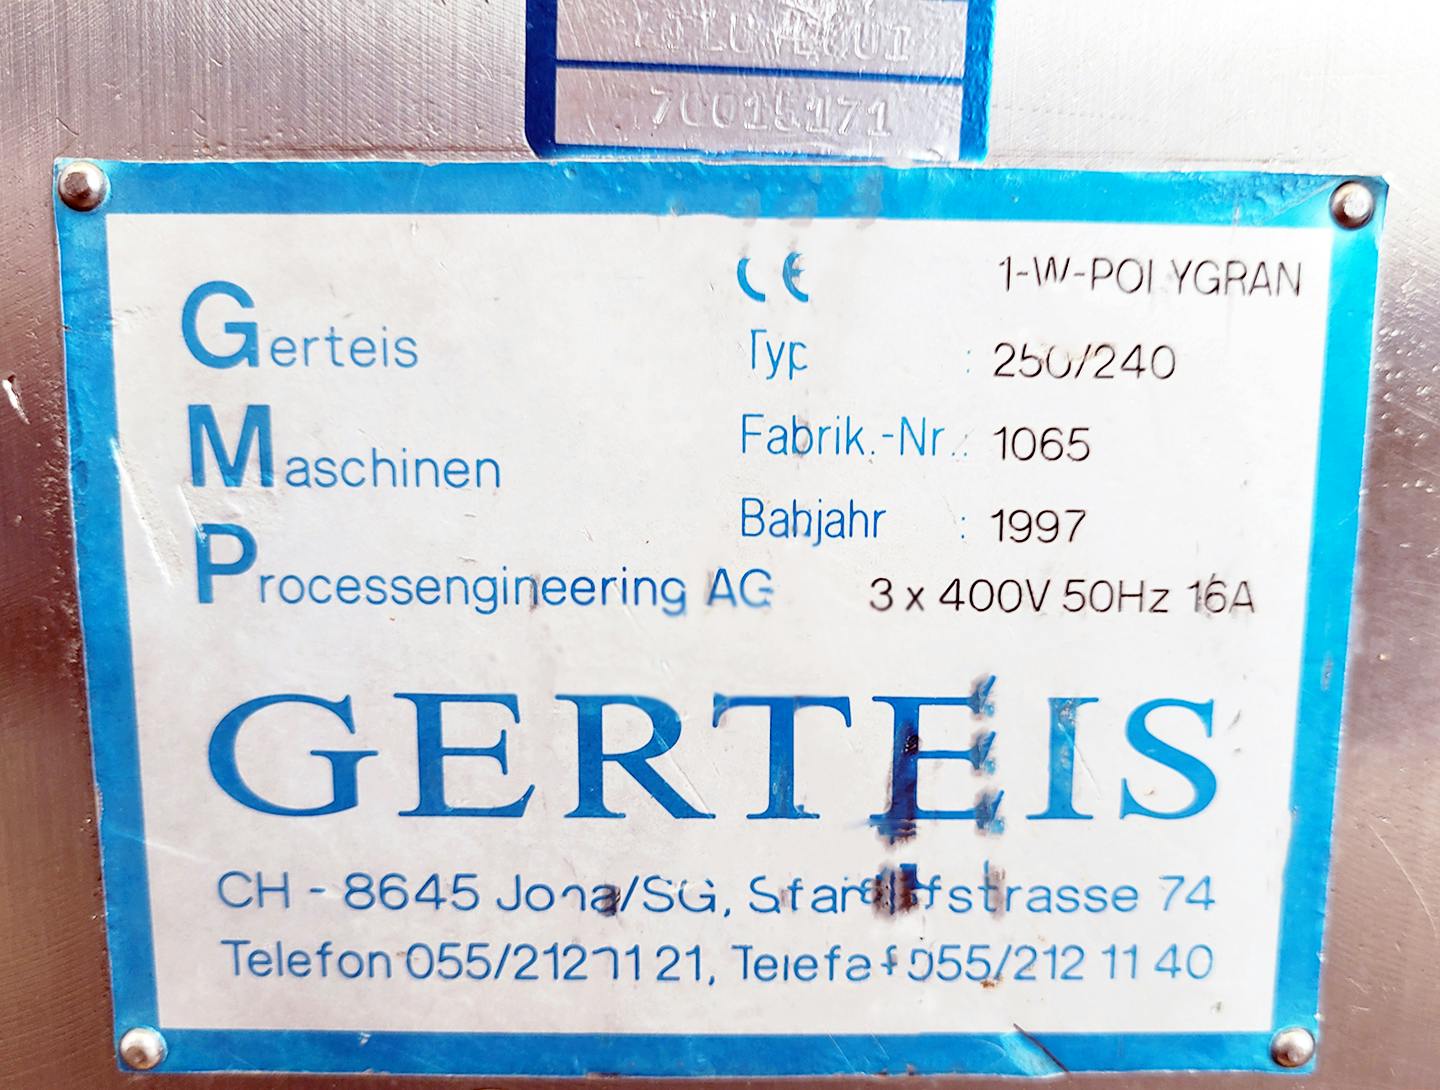 Gerteis 1-W-Polygran 250/240 - Granulador de tamiz - image 18